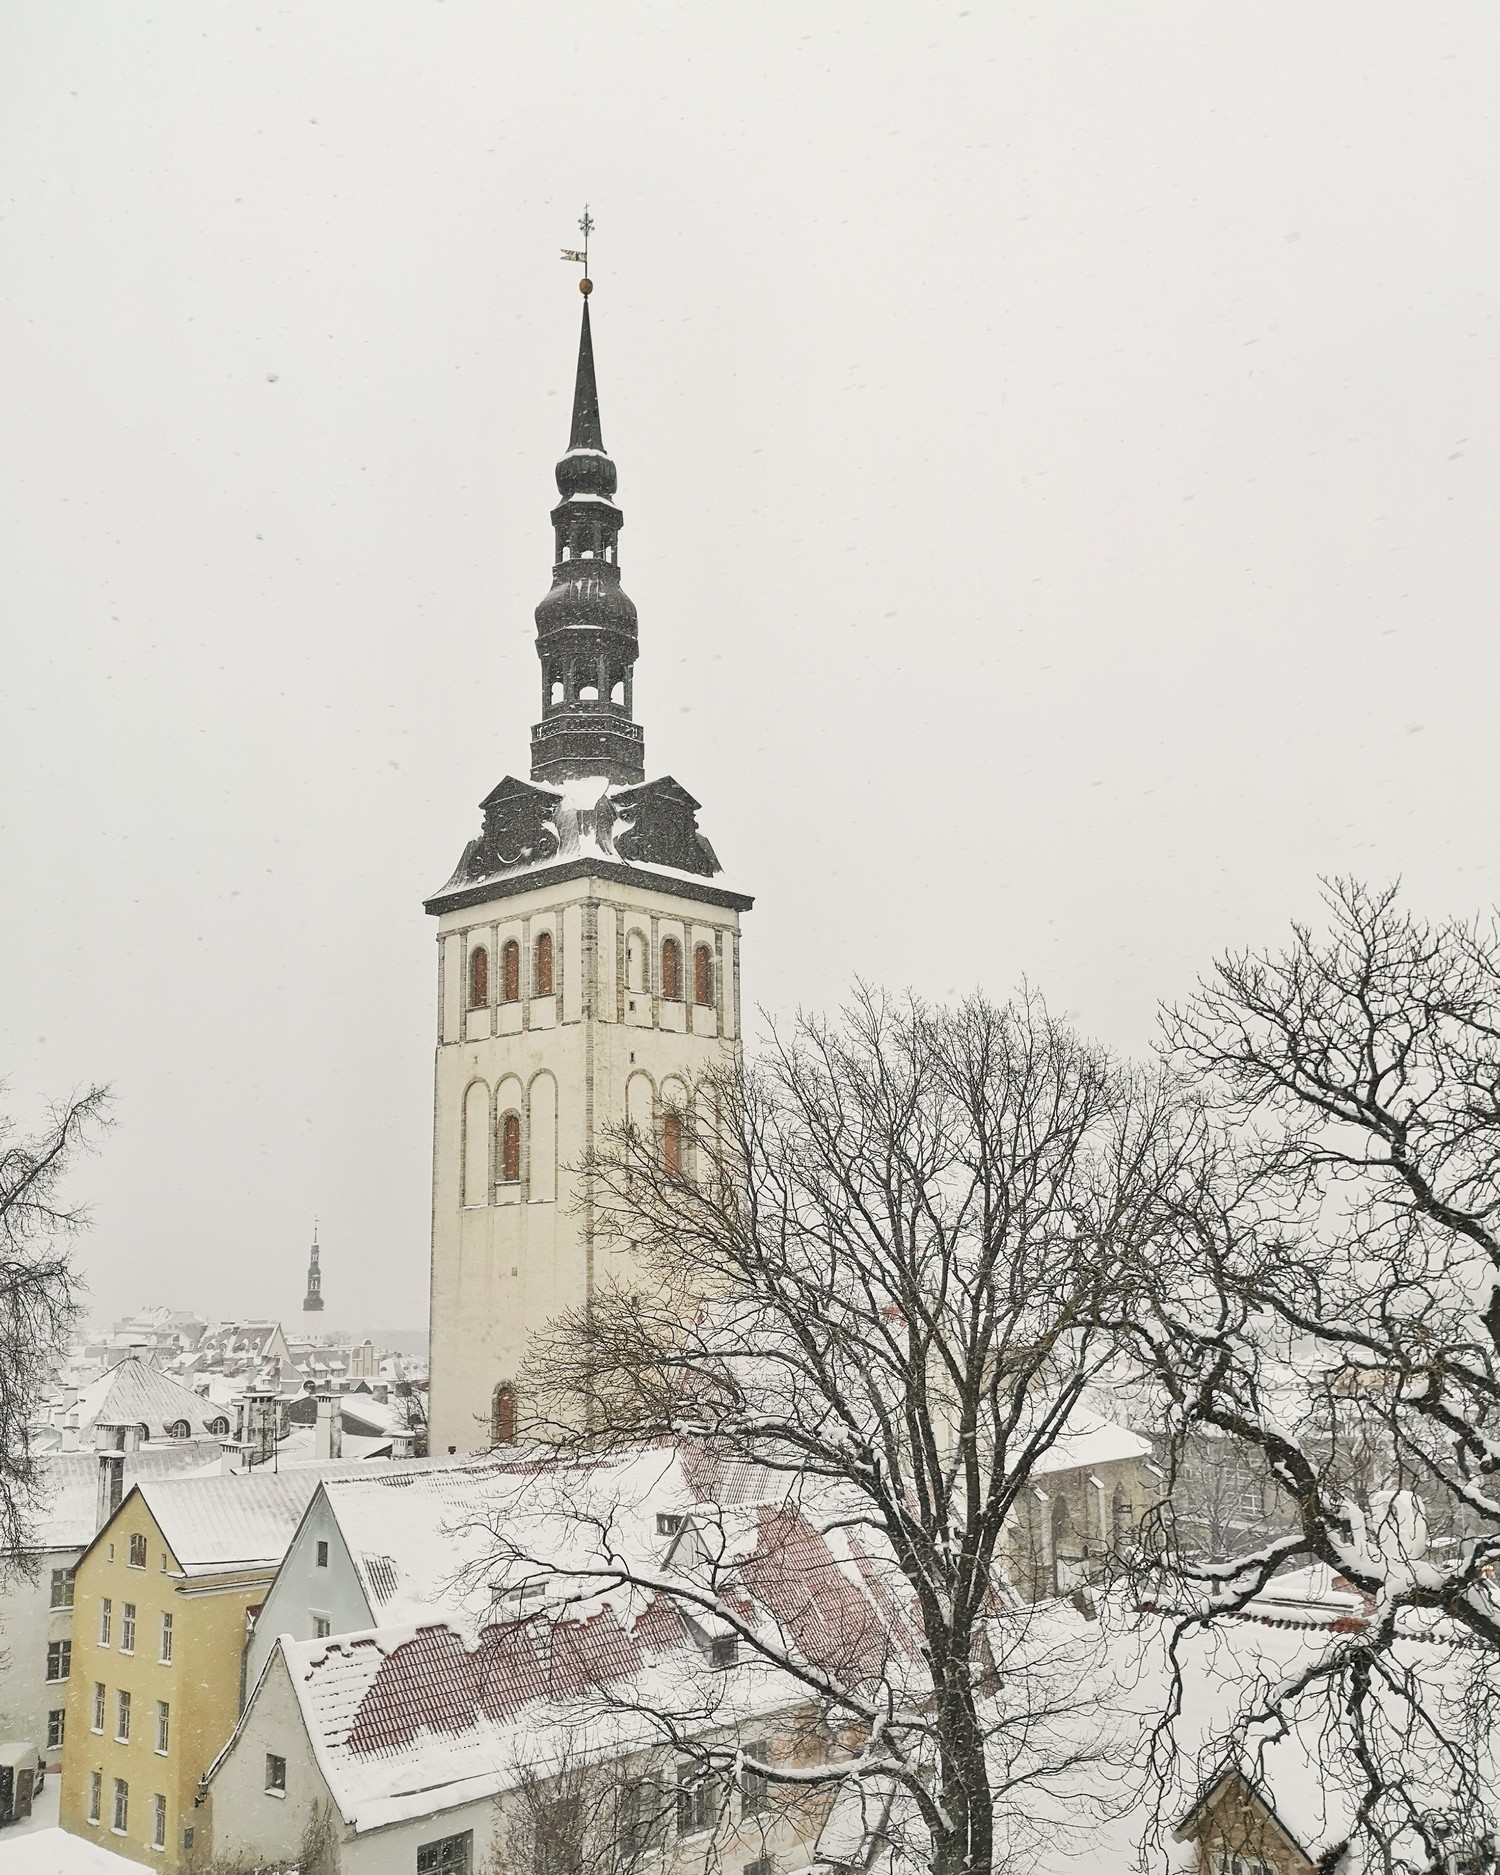 Postcards from Tallinn and Helsinki